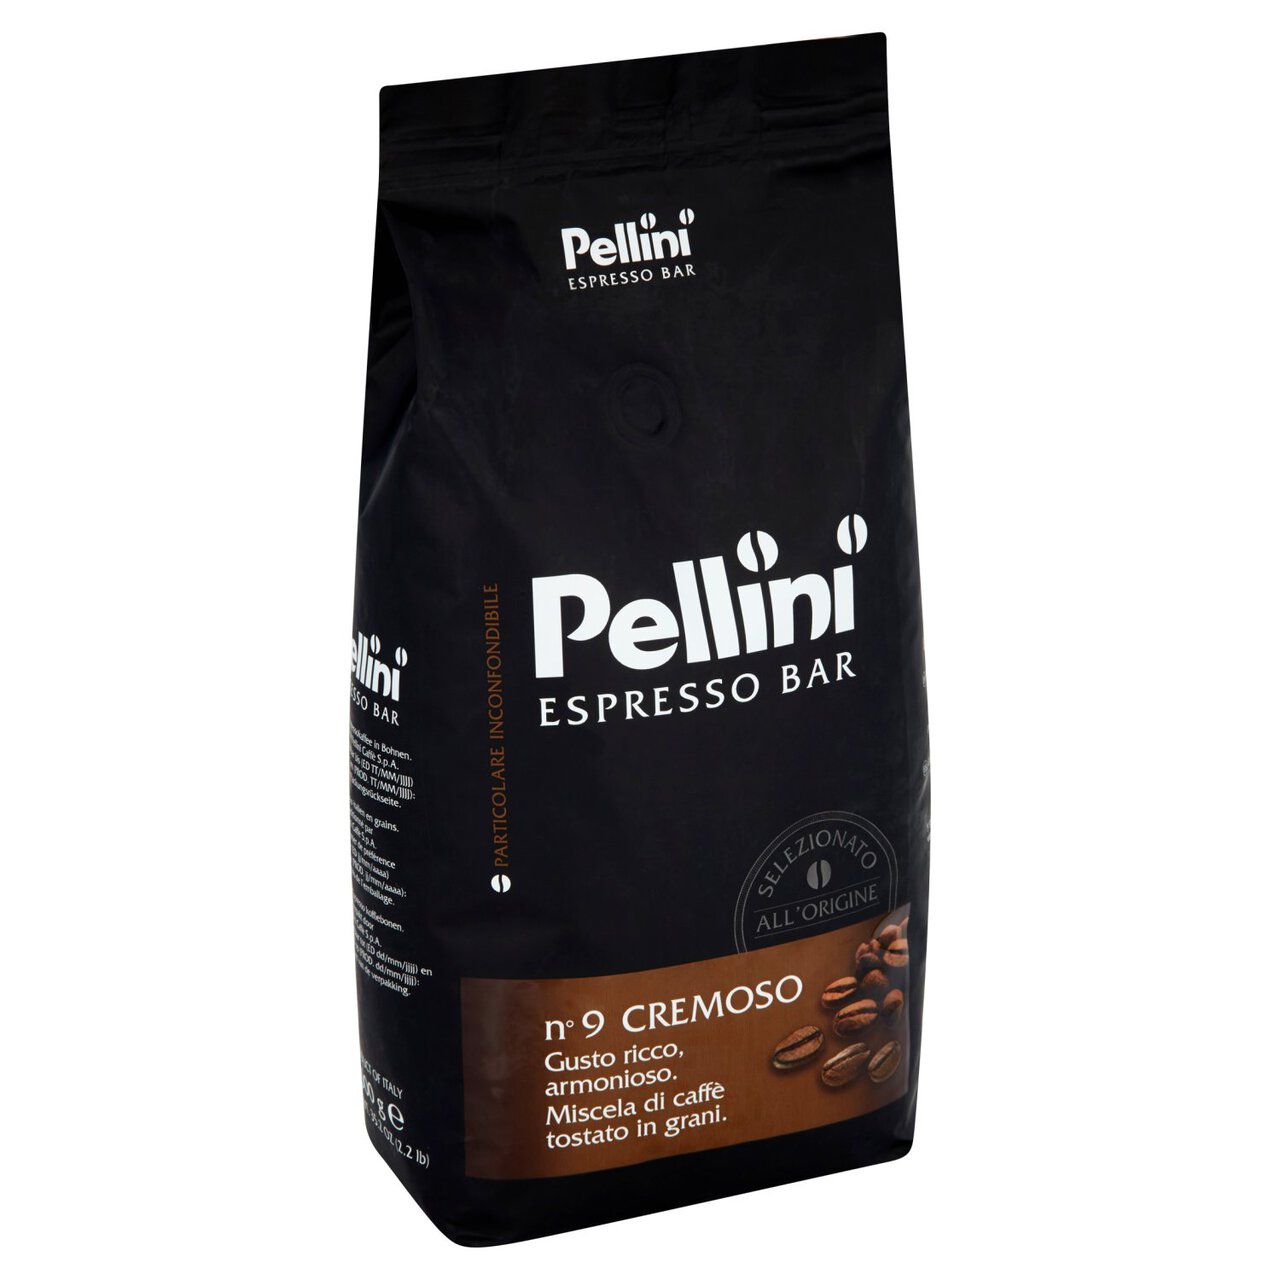 Pellini No.9 Cremoso Roasted Coffee Beans 1kg